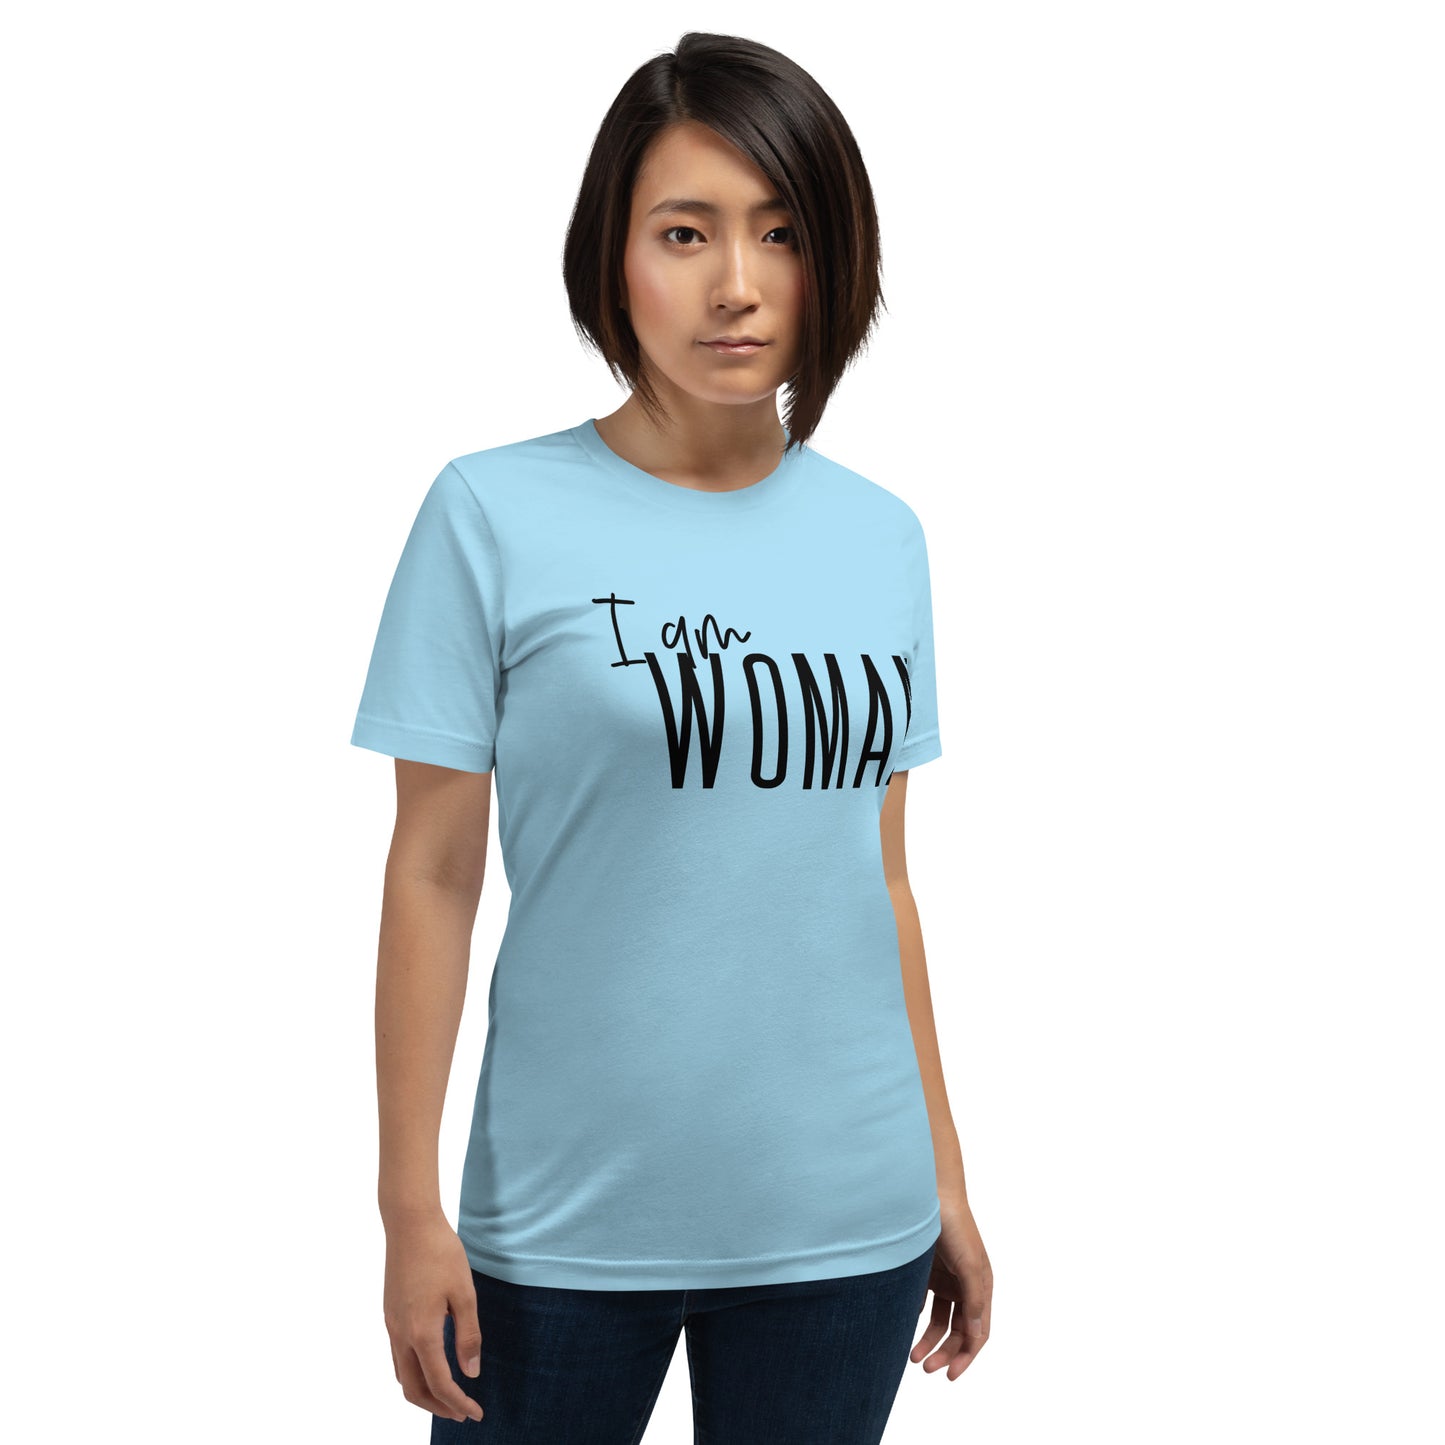 I am WOMAN T-Shirt